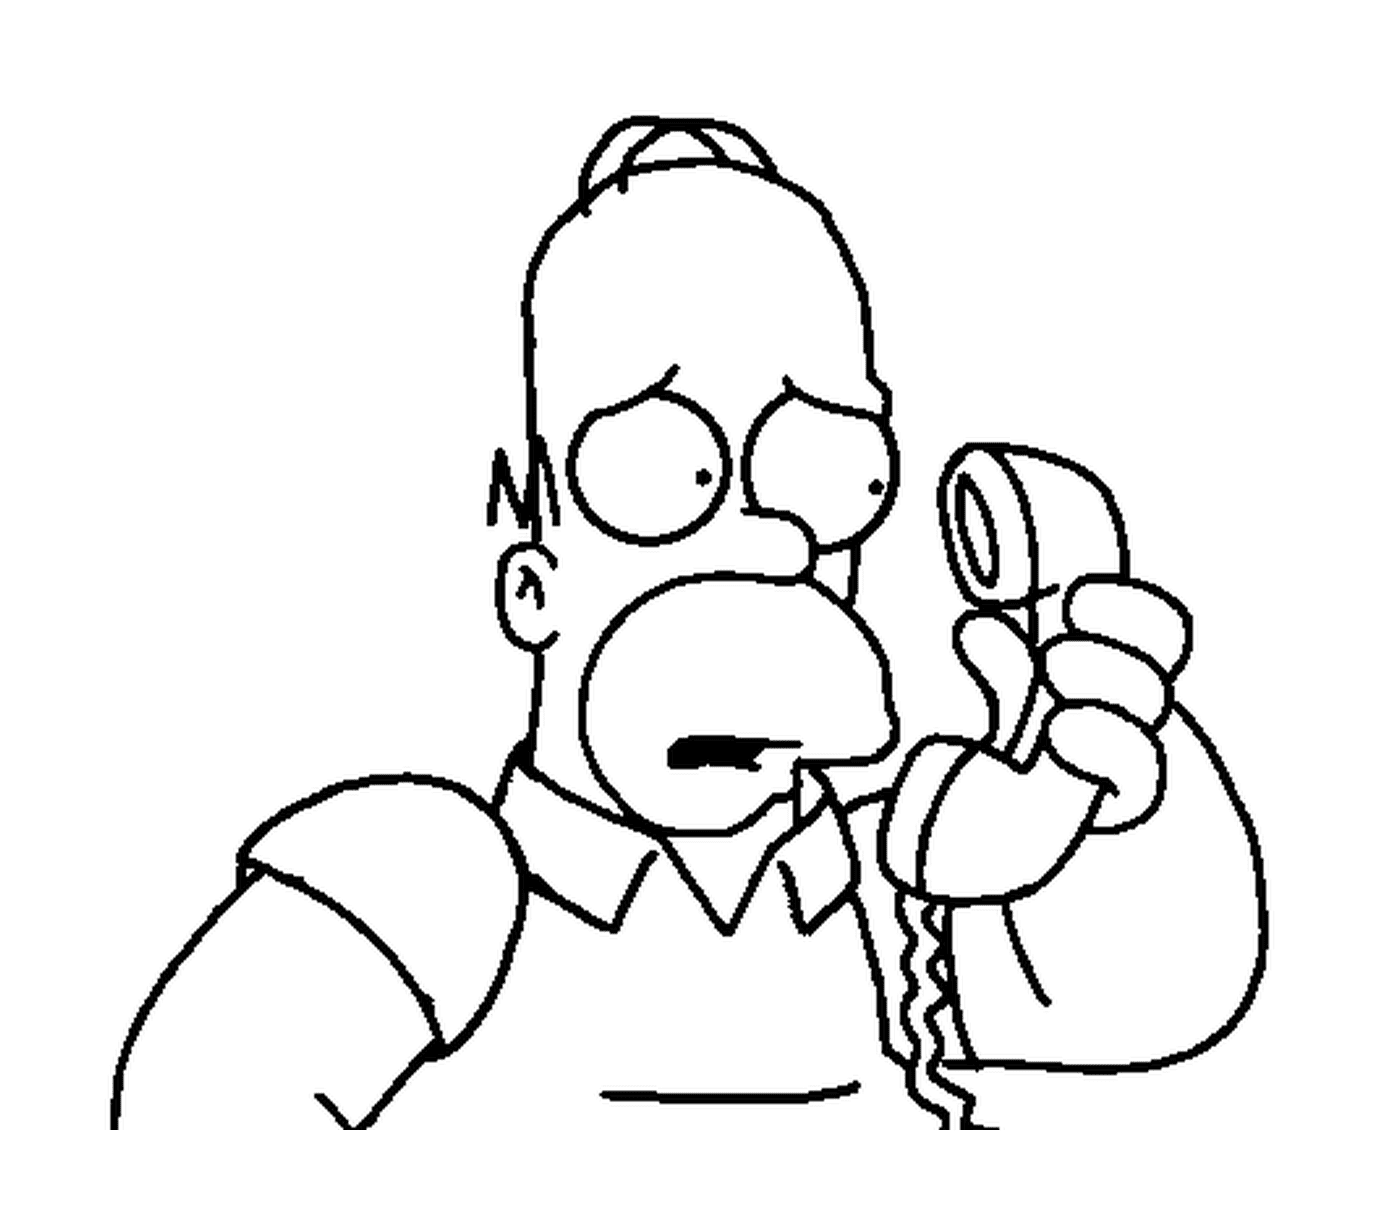  Homer worried on the phone 